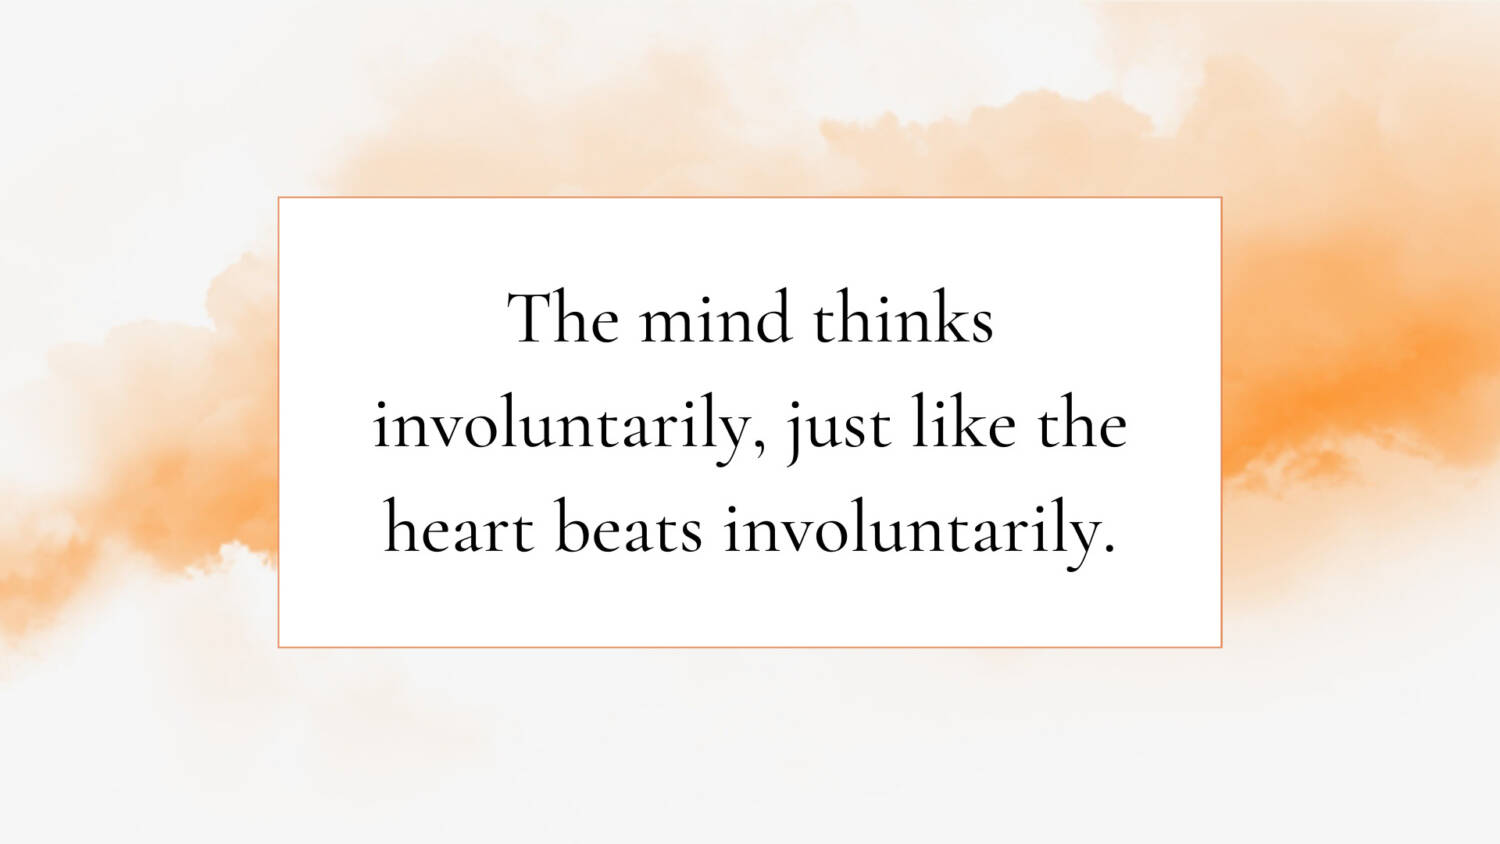 The mind thinks involuntarily, just like the heart beats involuntarily.